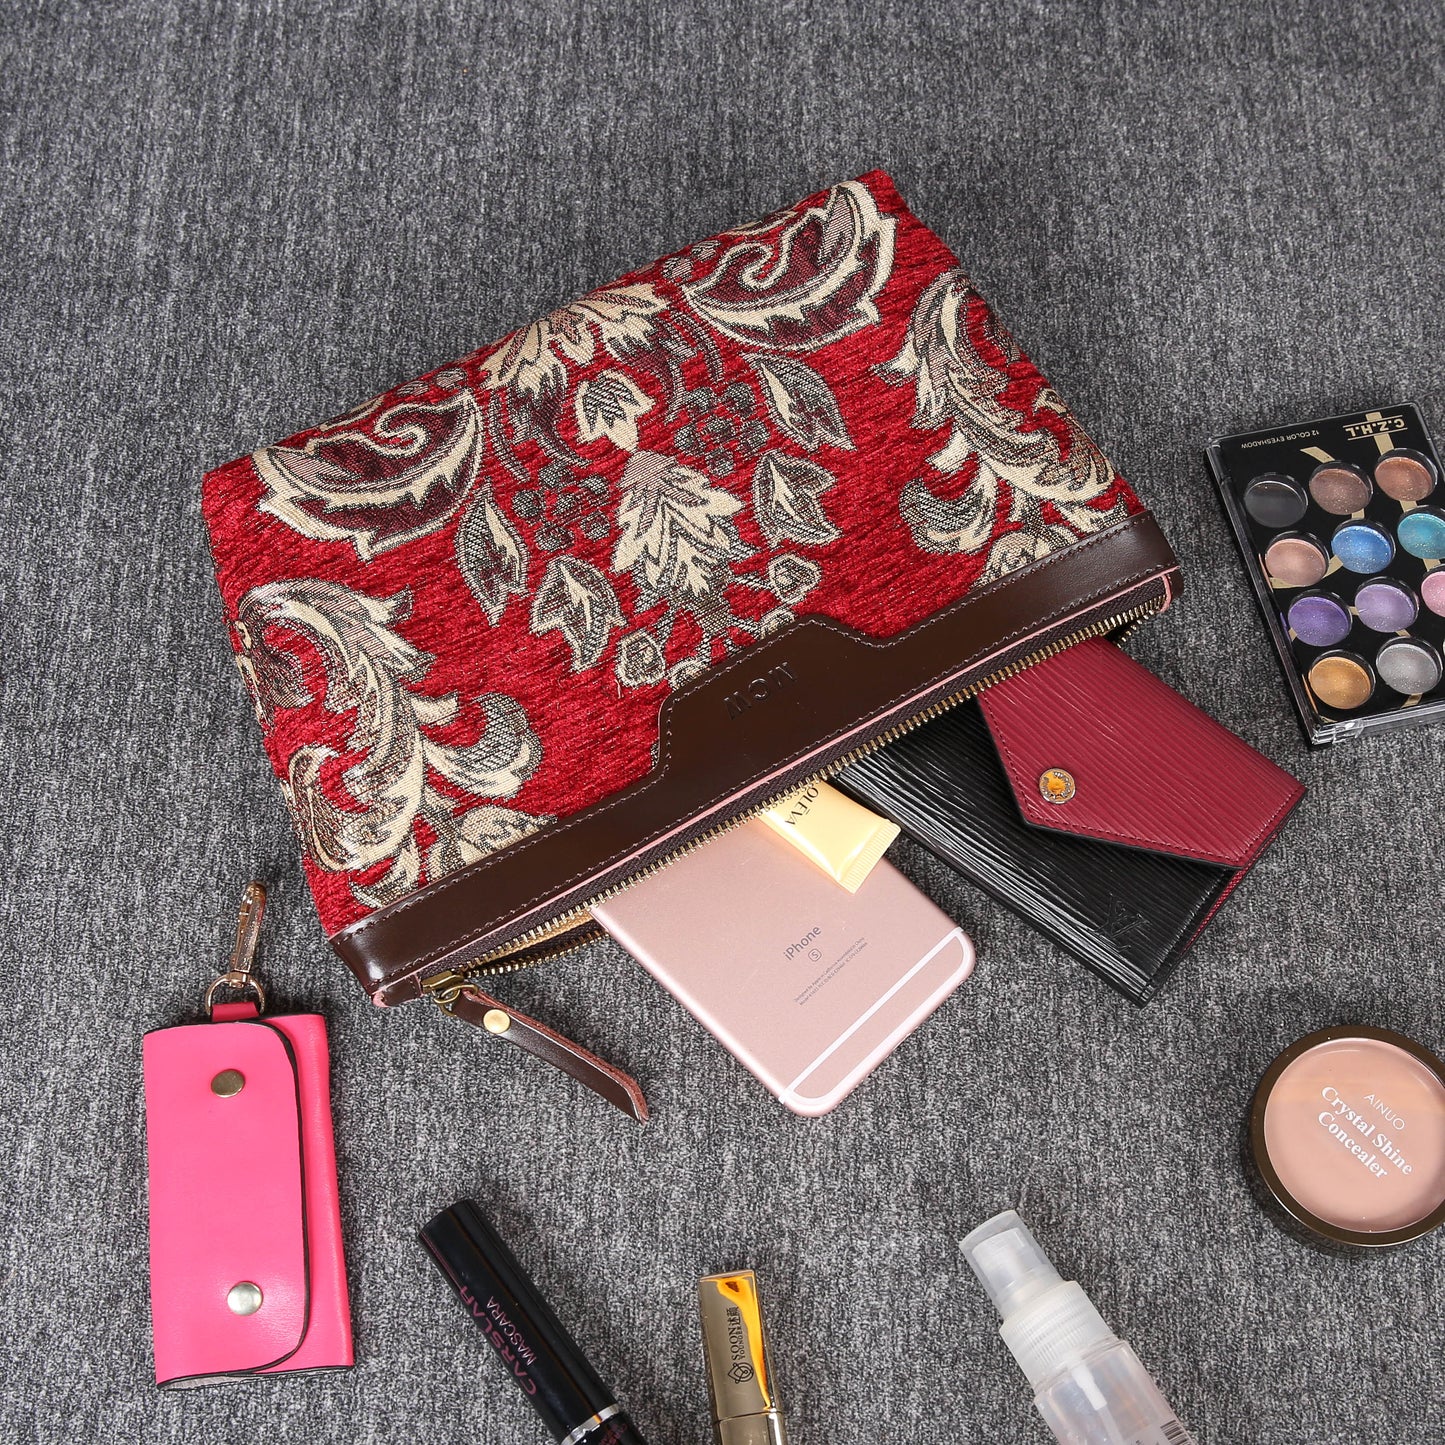 Carpet Makeup Bag Victorian Blossom Red/Gold